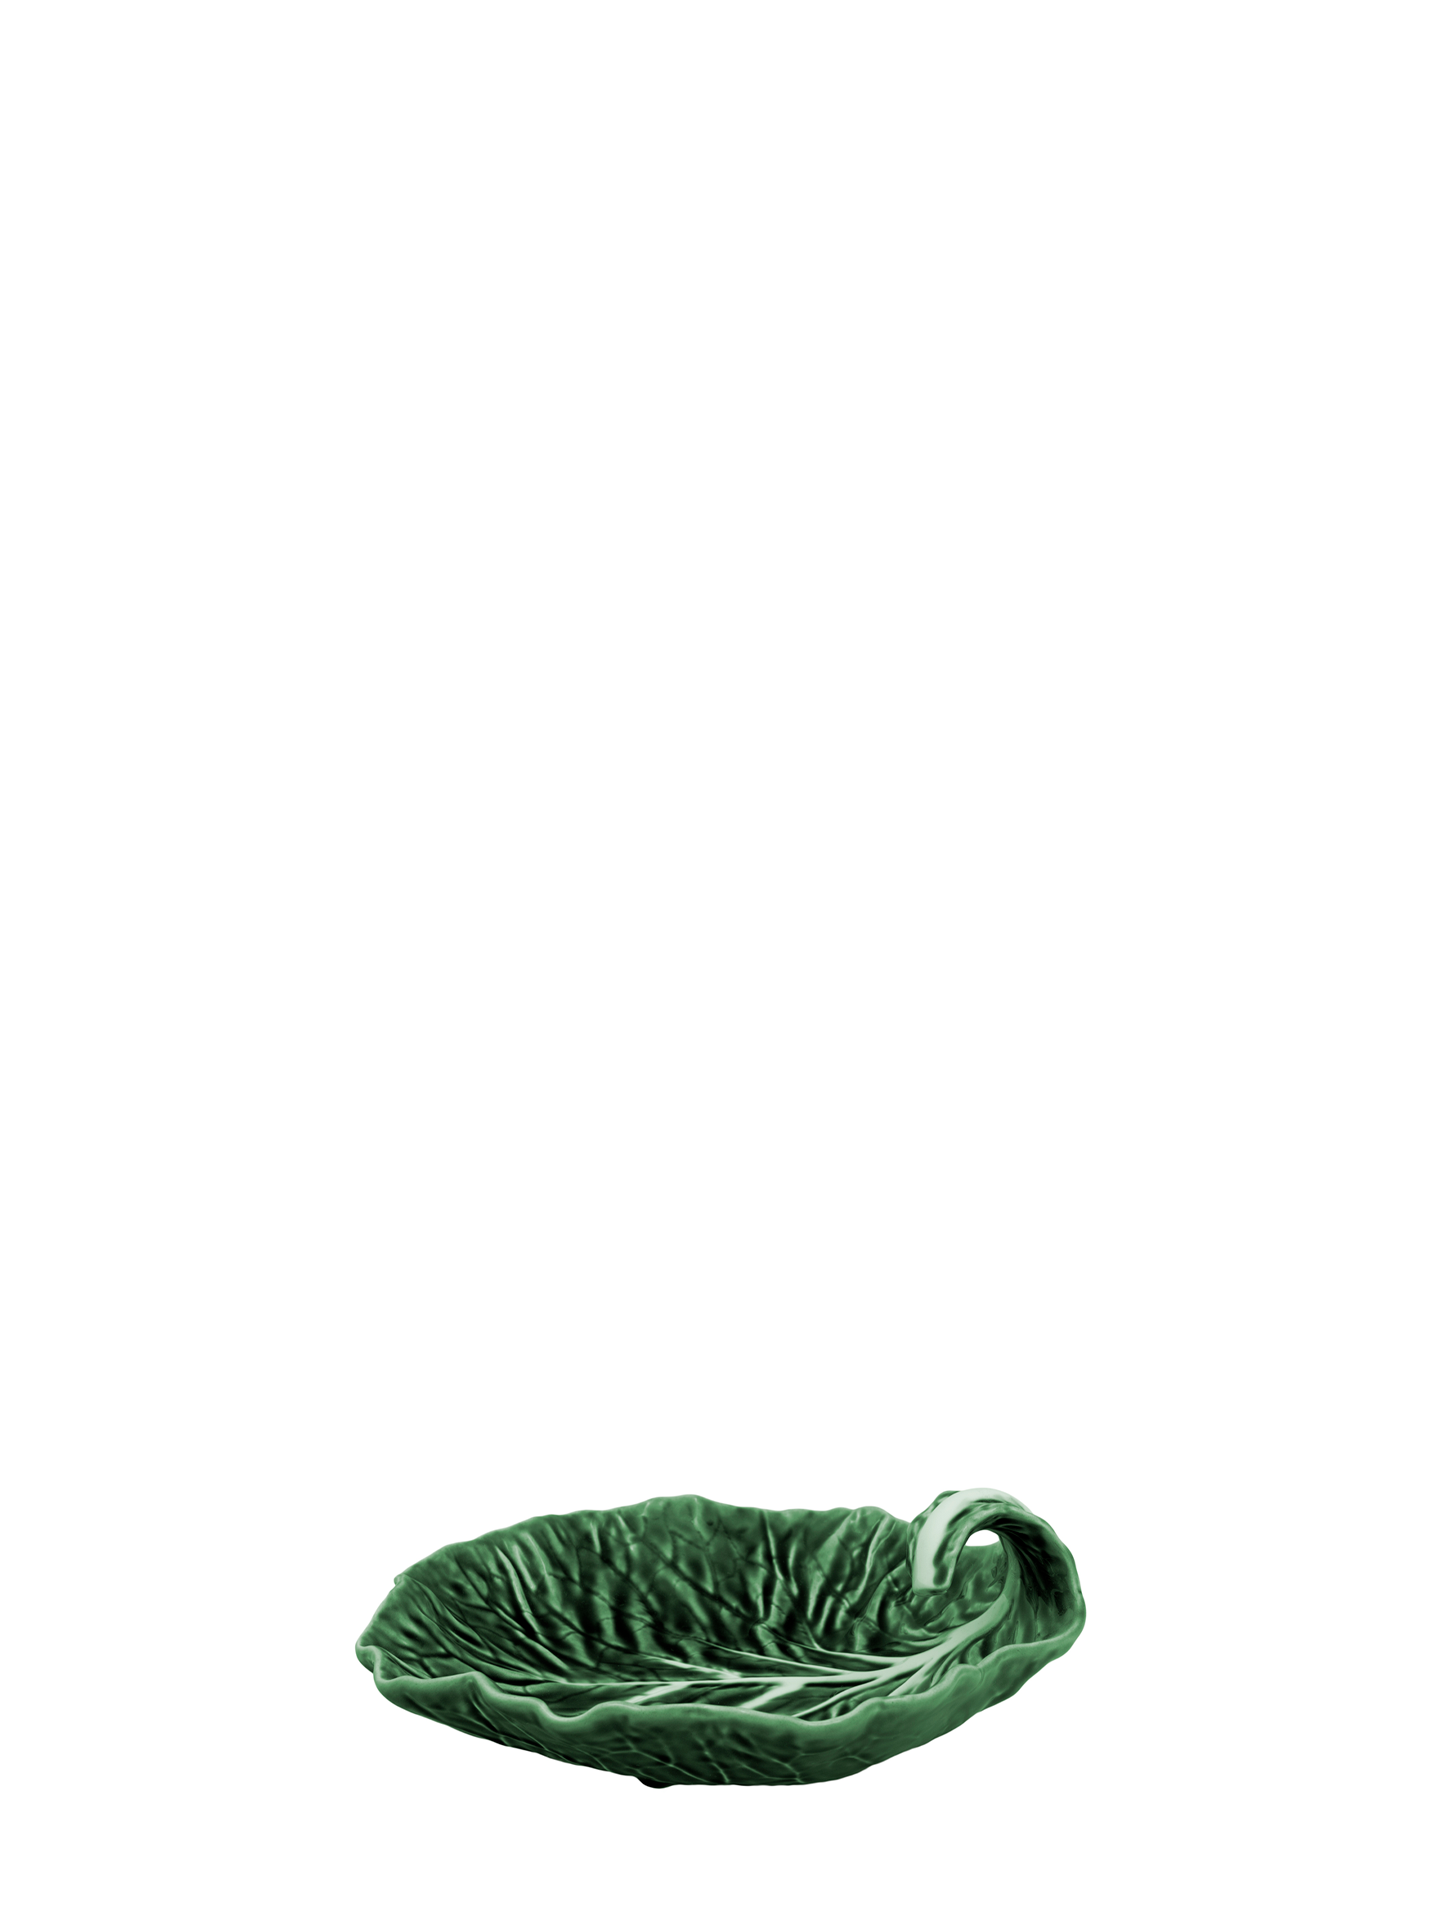 Large Curved Cabbage Leaf Bowl, green